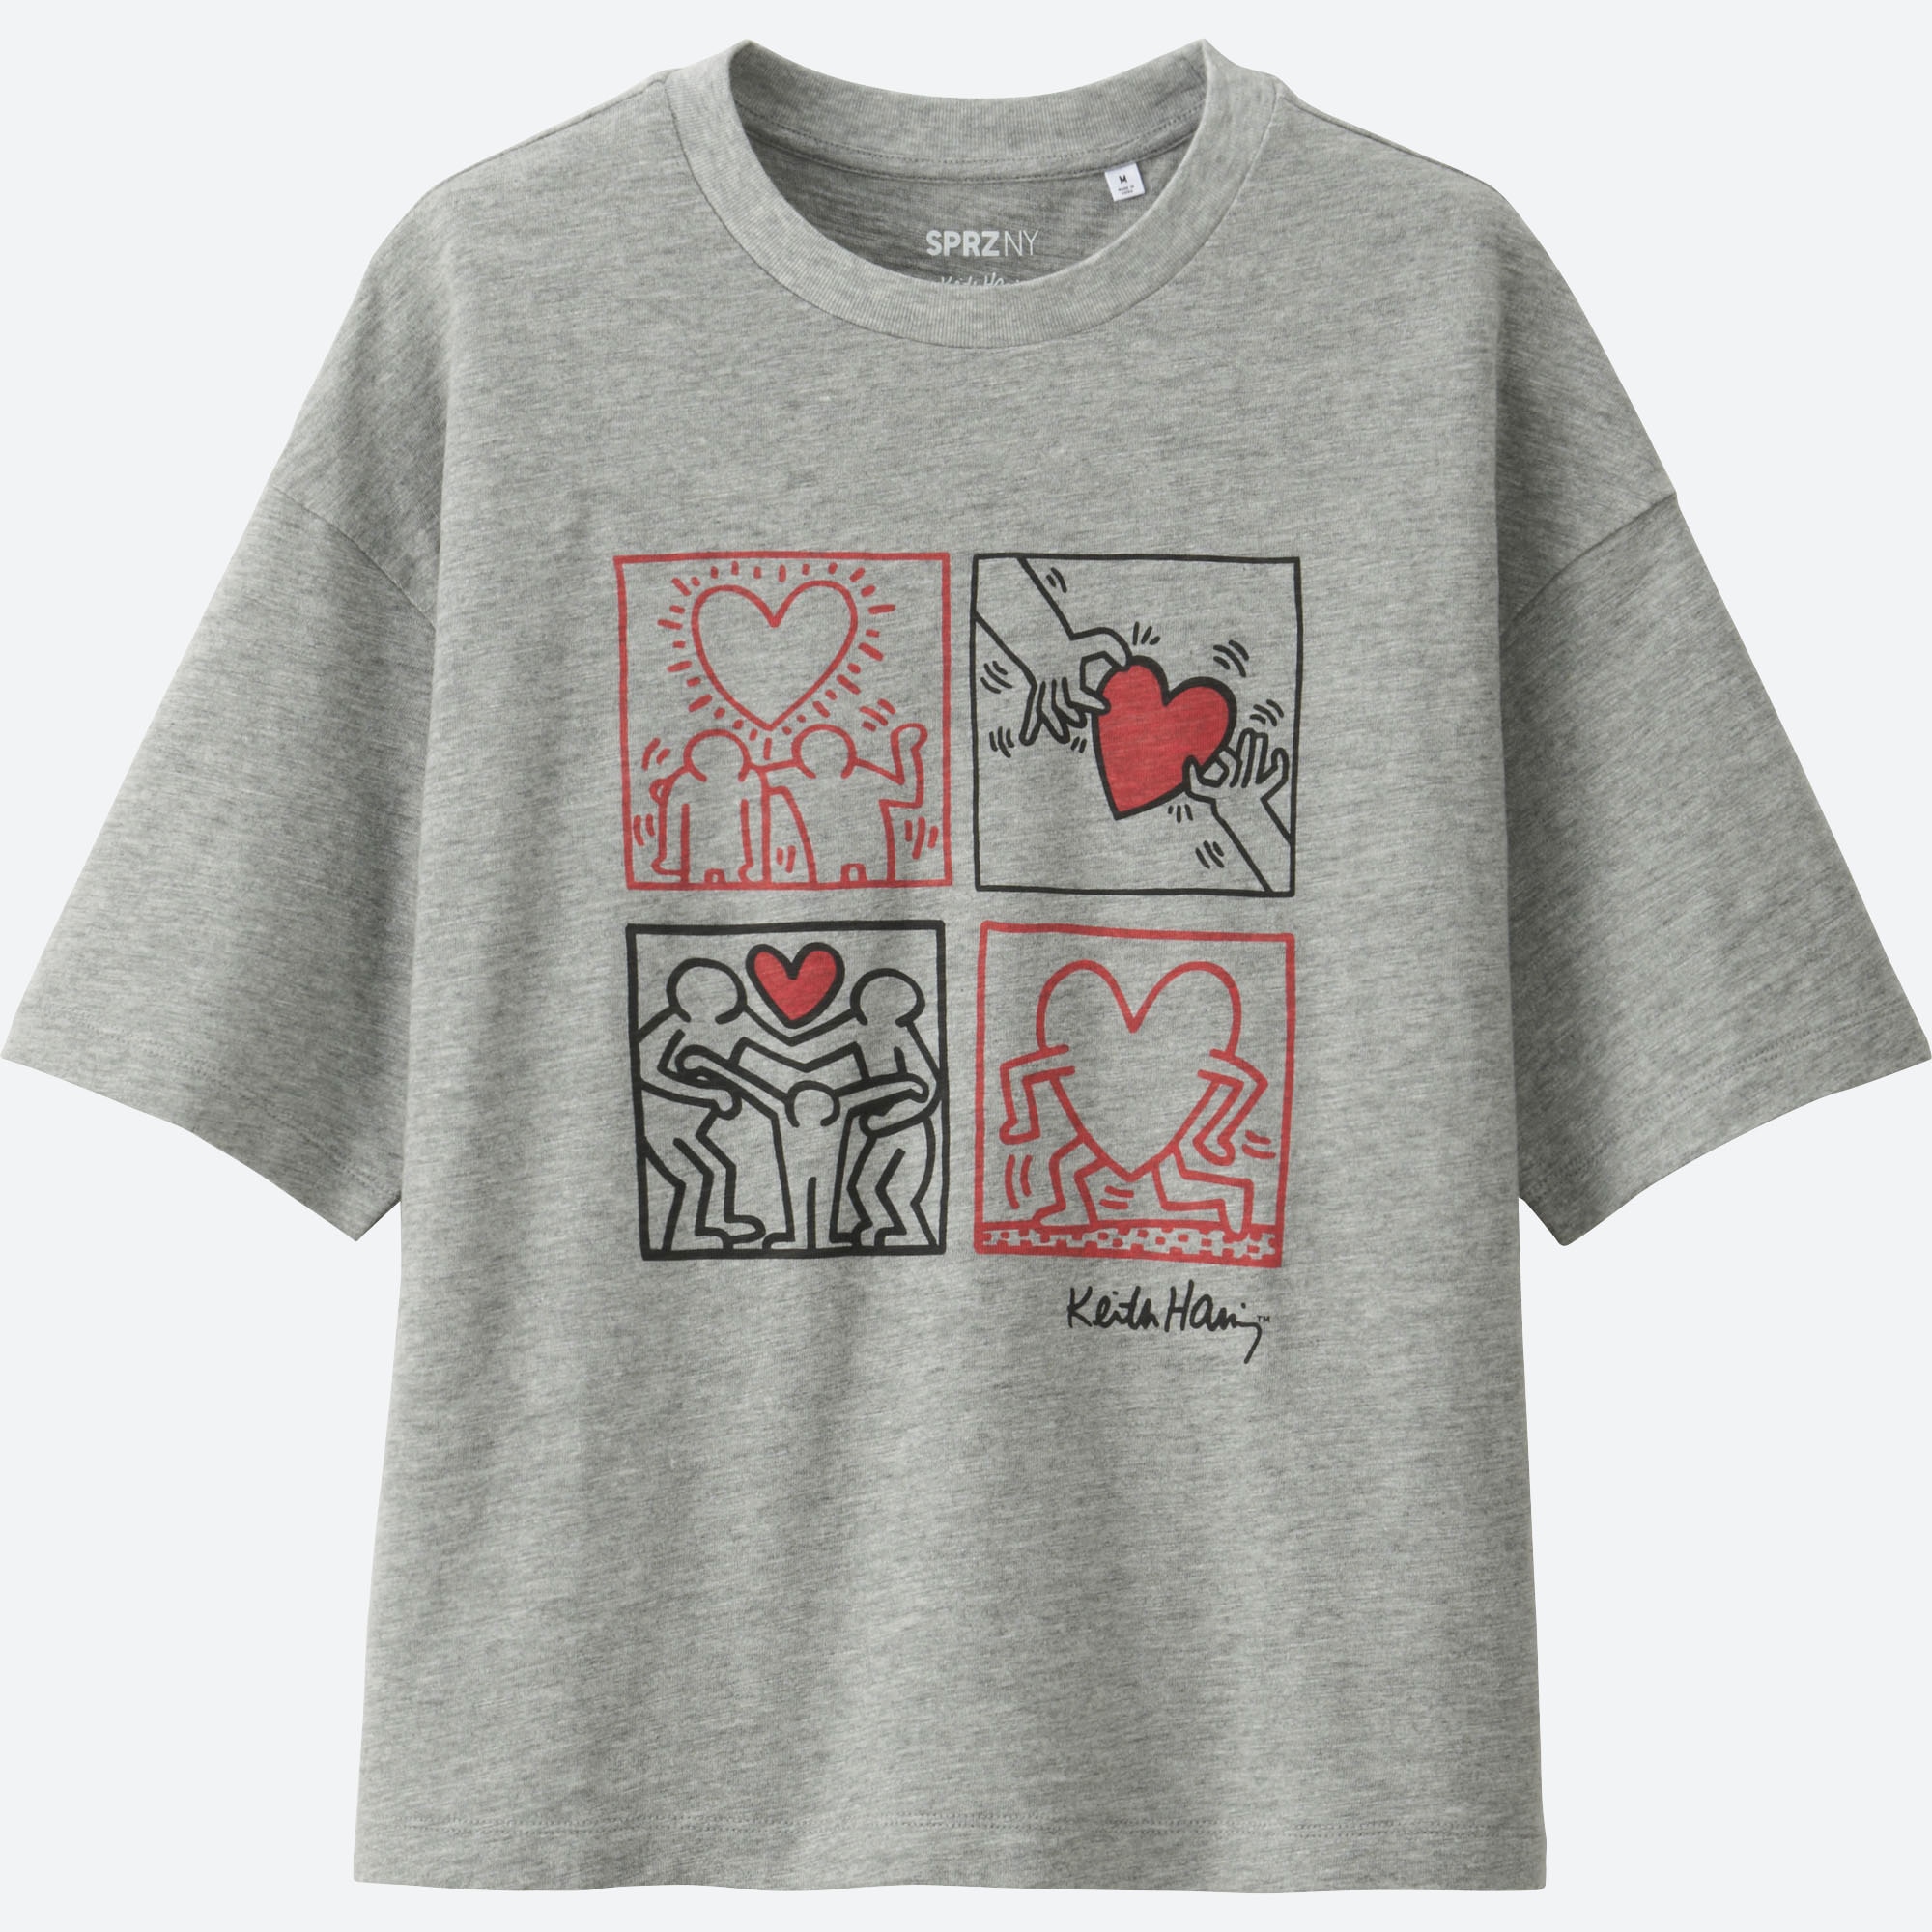 Кит харинг h m. Keith Haring футболка Uniqlo. Keith Haring одежда Uniqlo. Кейт Харинг юникло. Хокусай толстовка Uniqlo.